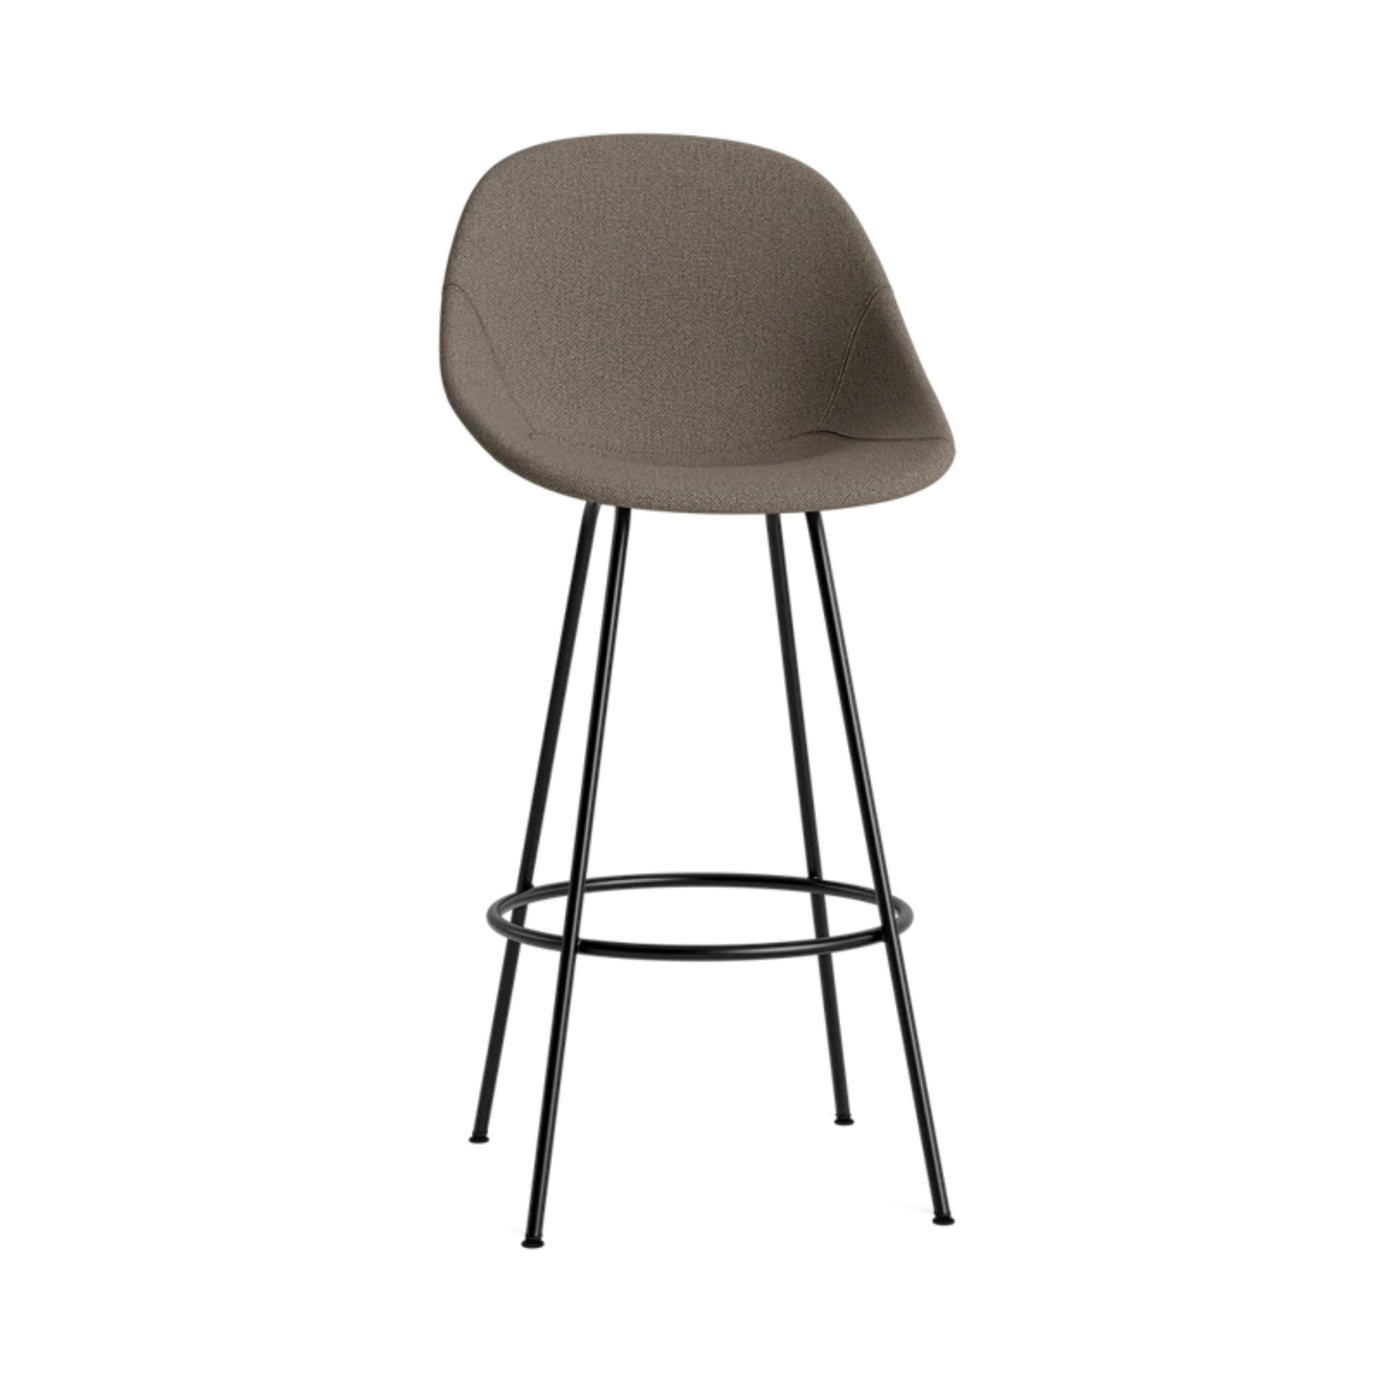 Normann Copenhagen Mat Bar Chair. Shop now at someday designs. #colour_hallingdal-270